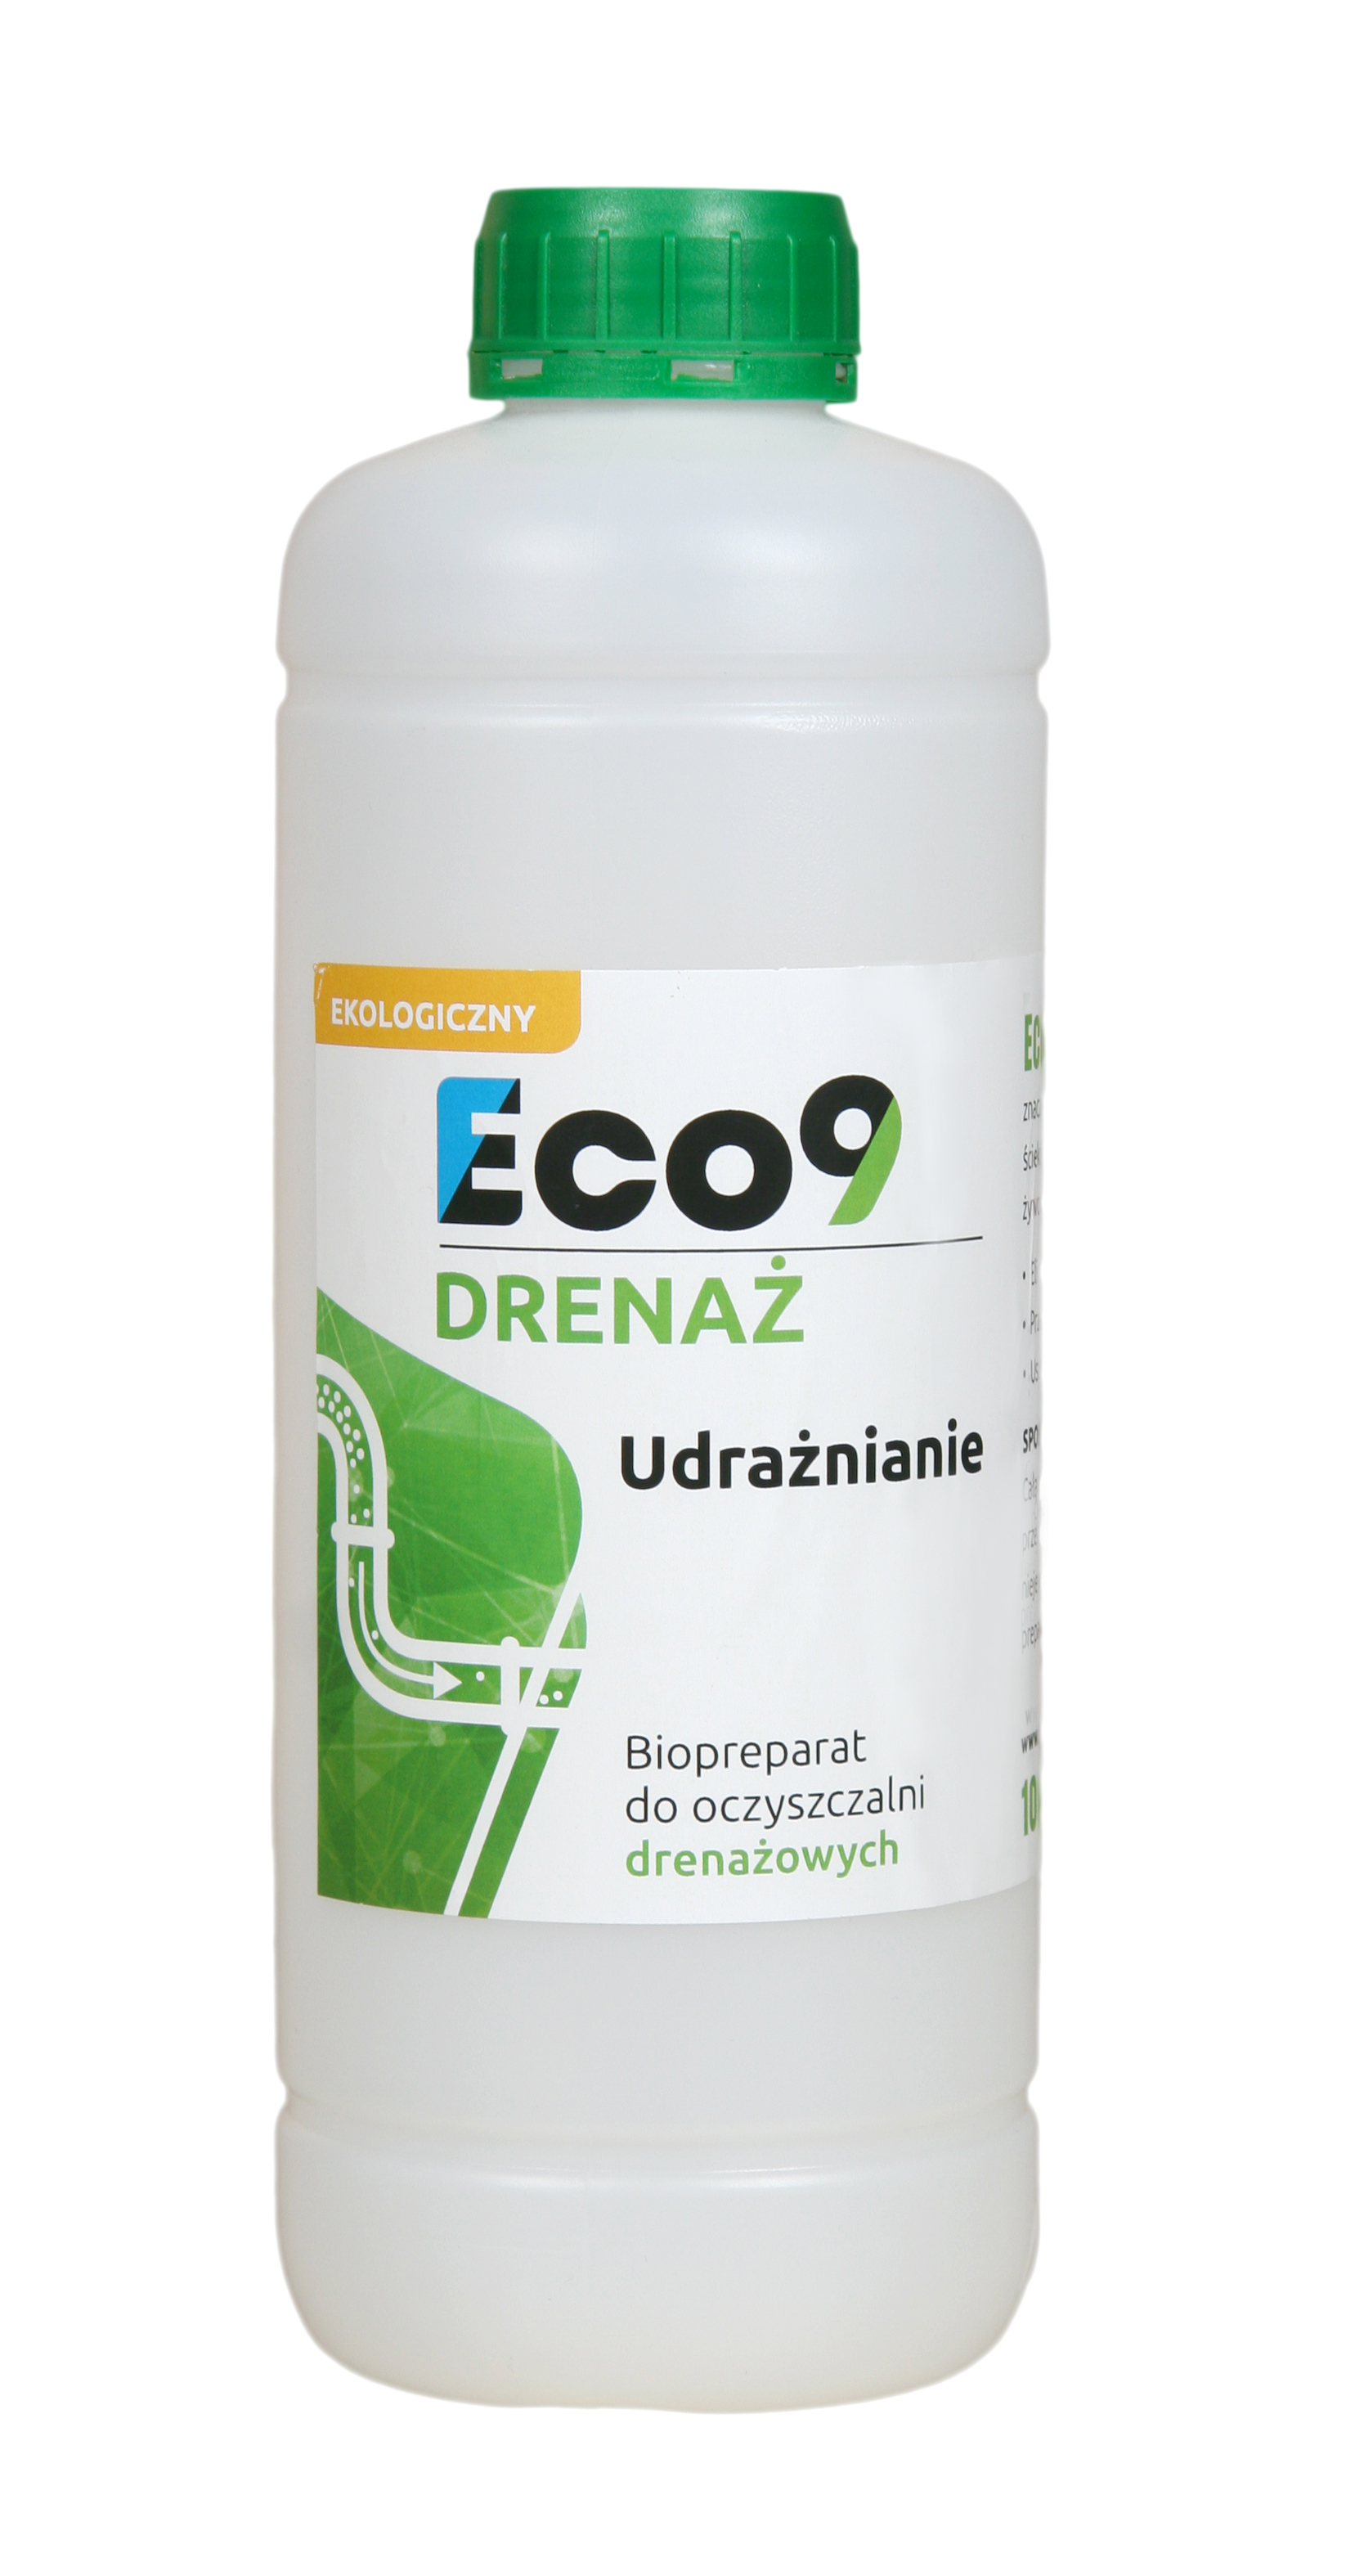 Eco9 drenaż udrażanianie drenażu bakterie preparat